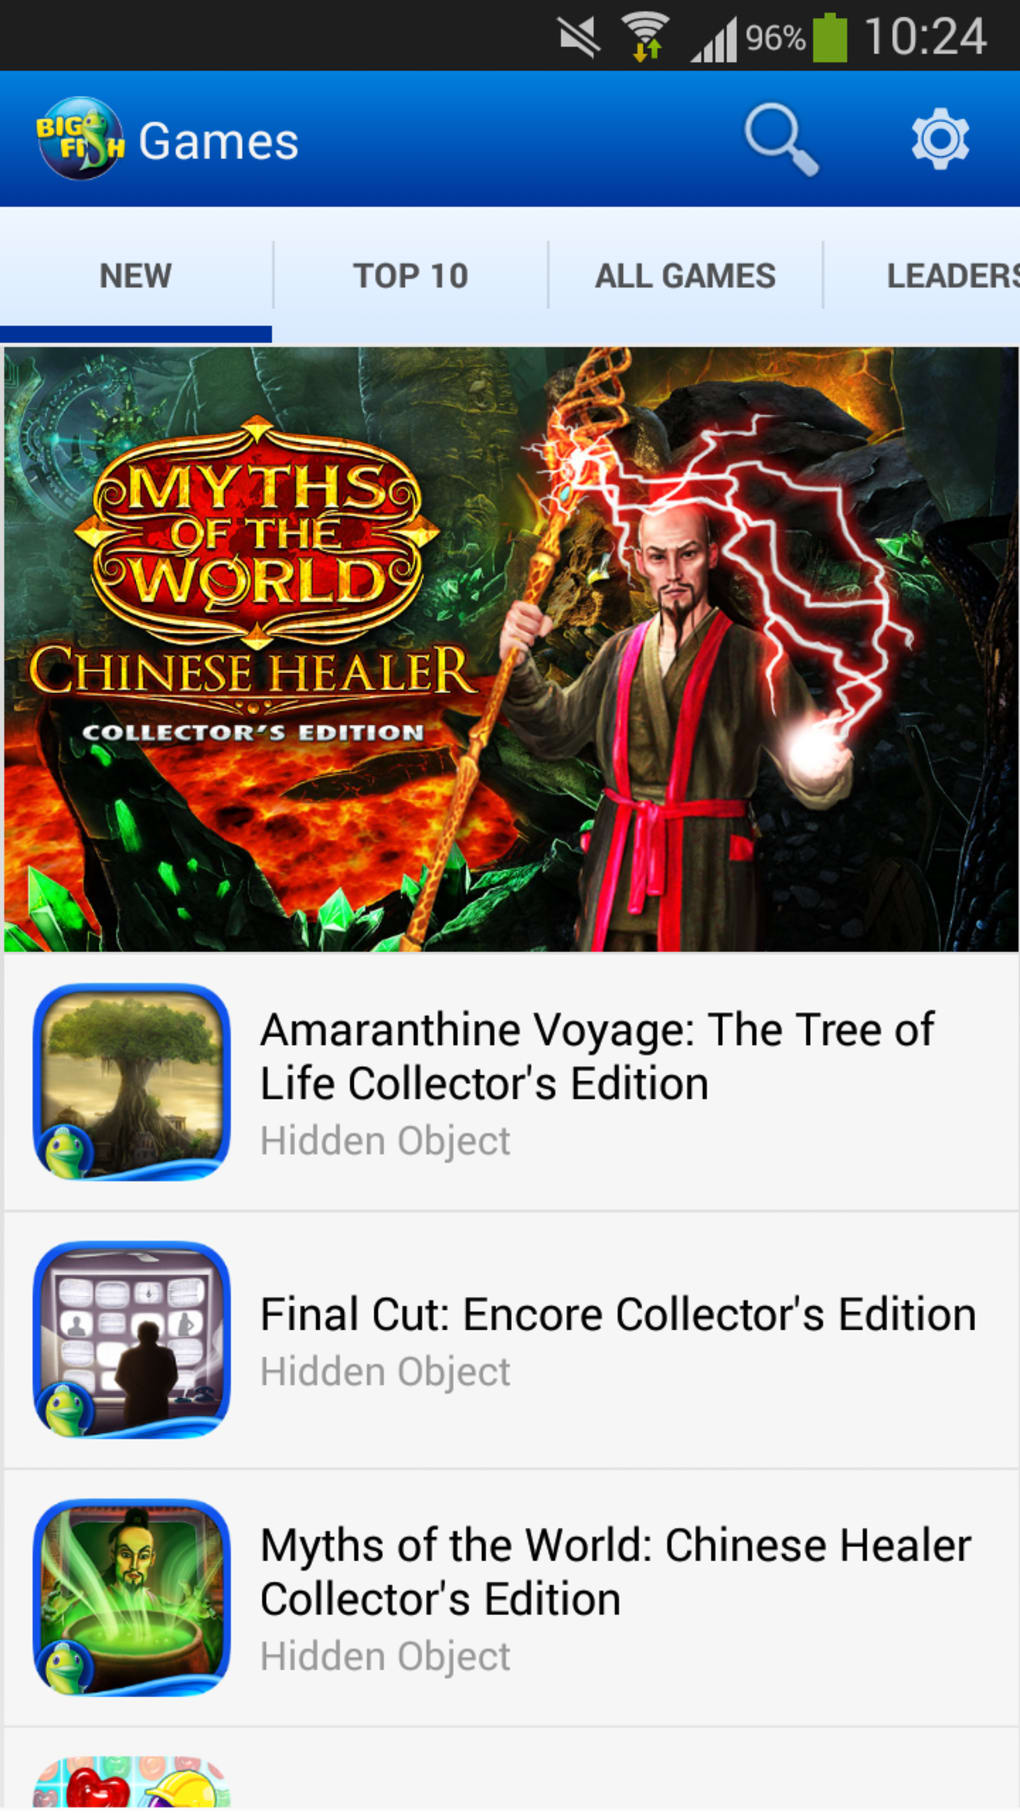 Big Fish Games App - Apps on Google Play